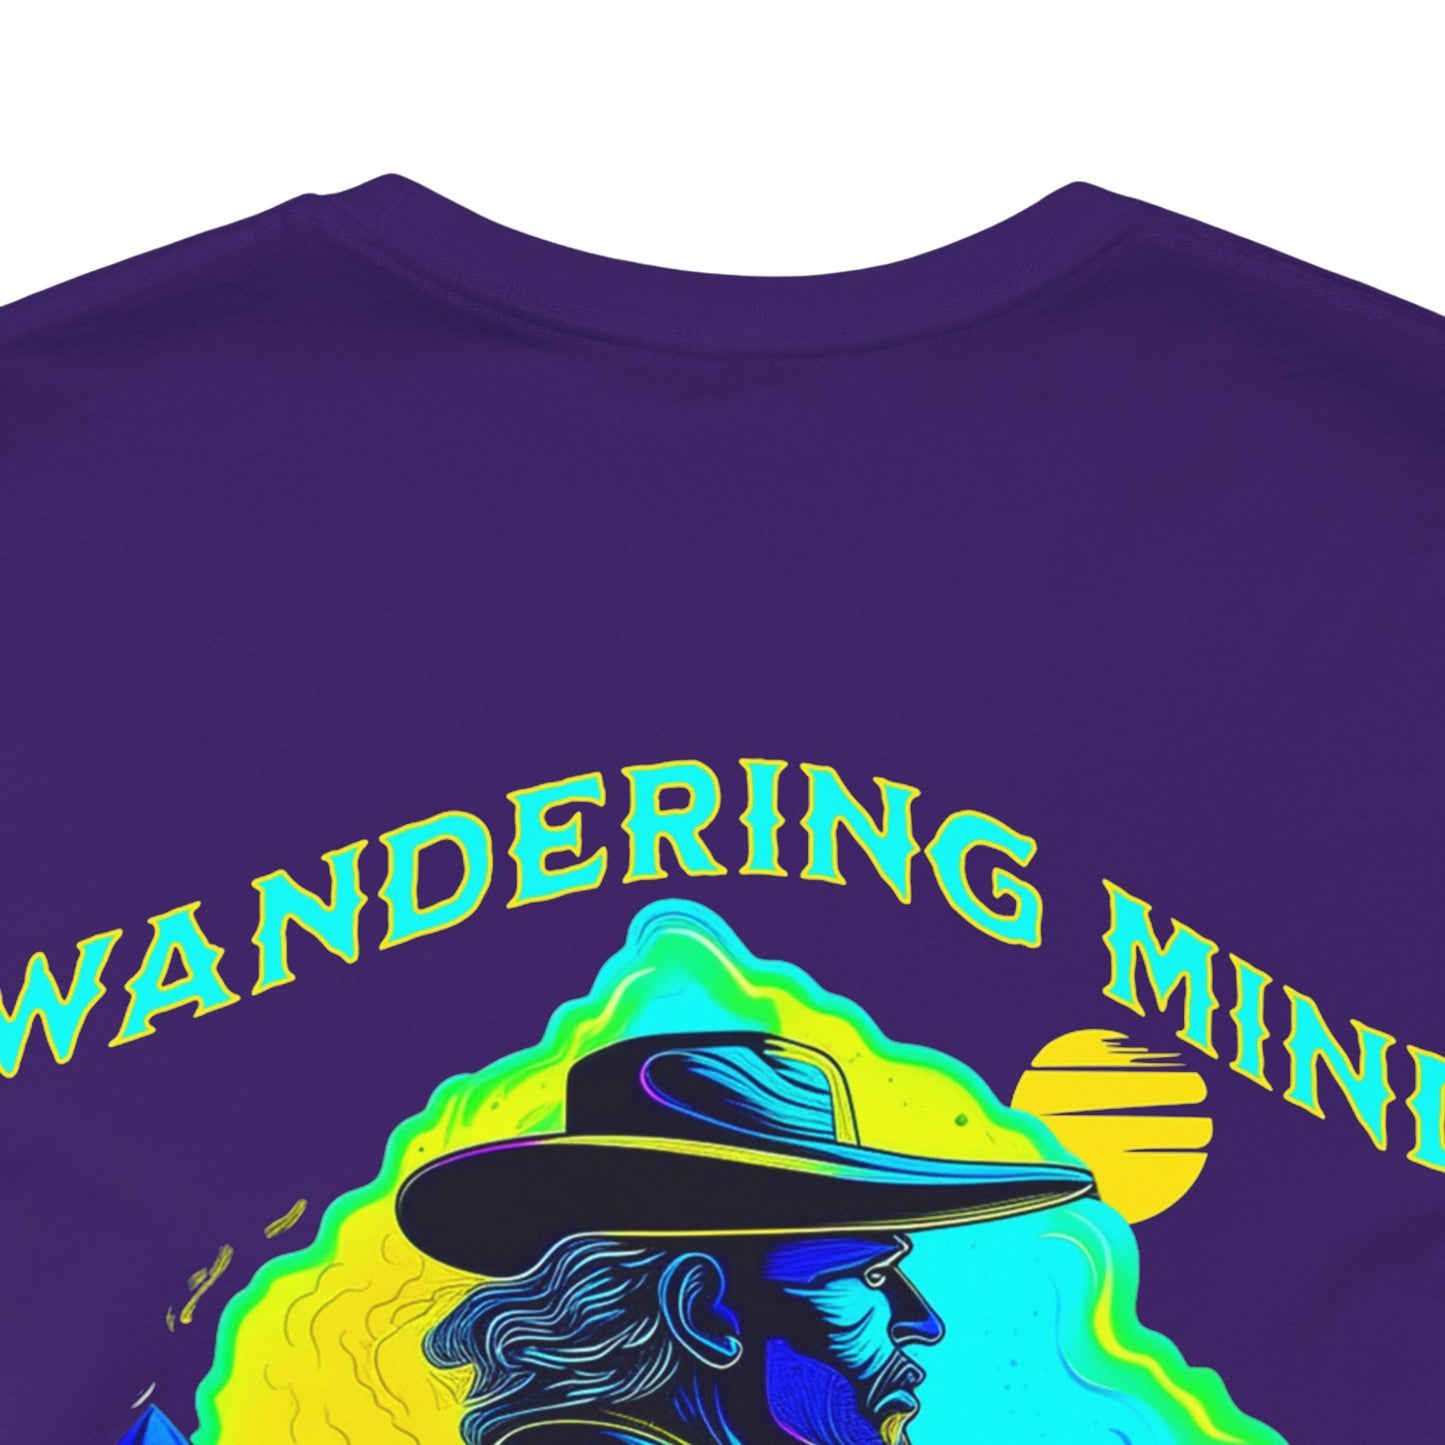 Wandering Mind - T-Shirt